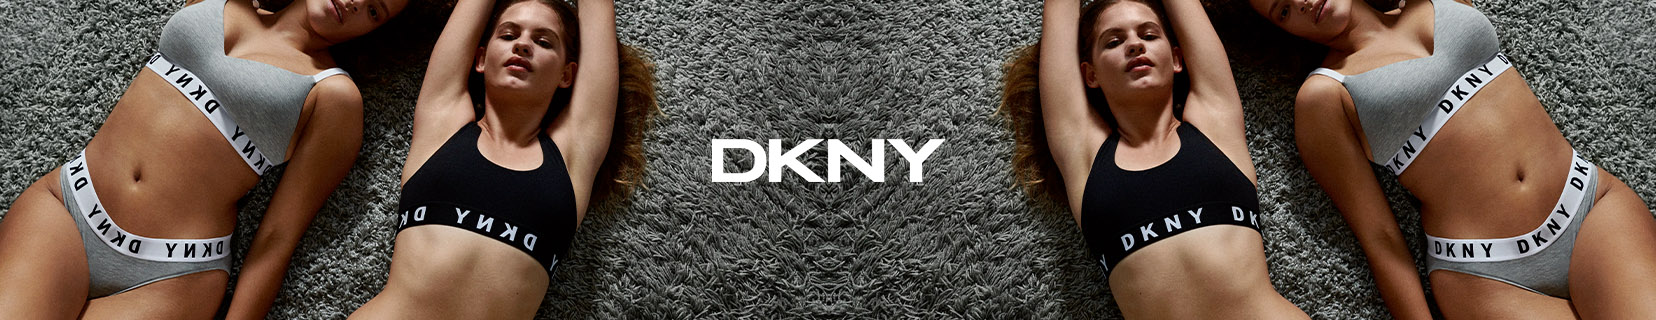 DKNY Intimates - Stockholm Fashion District